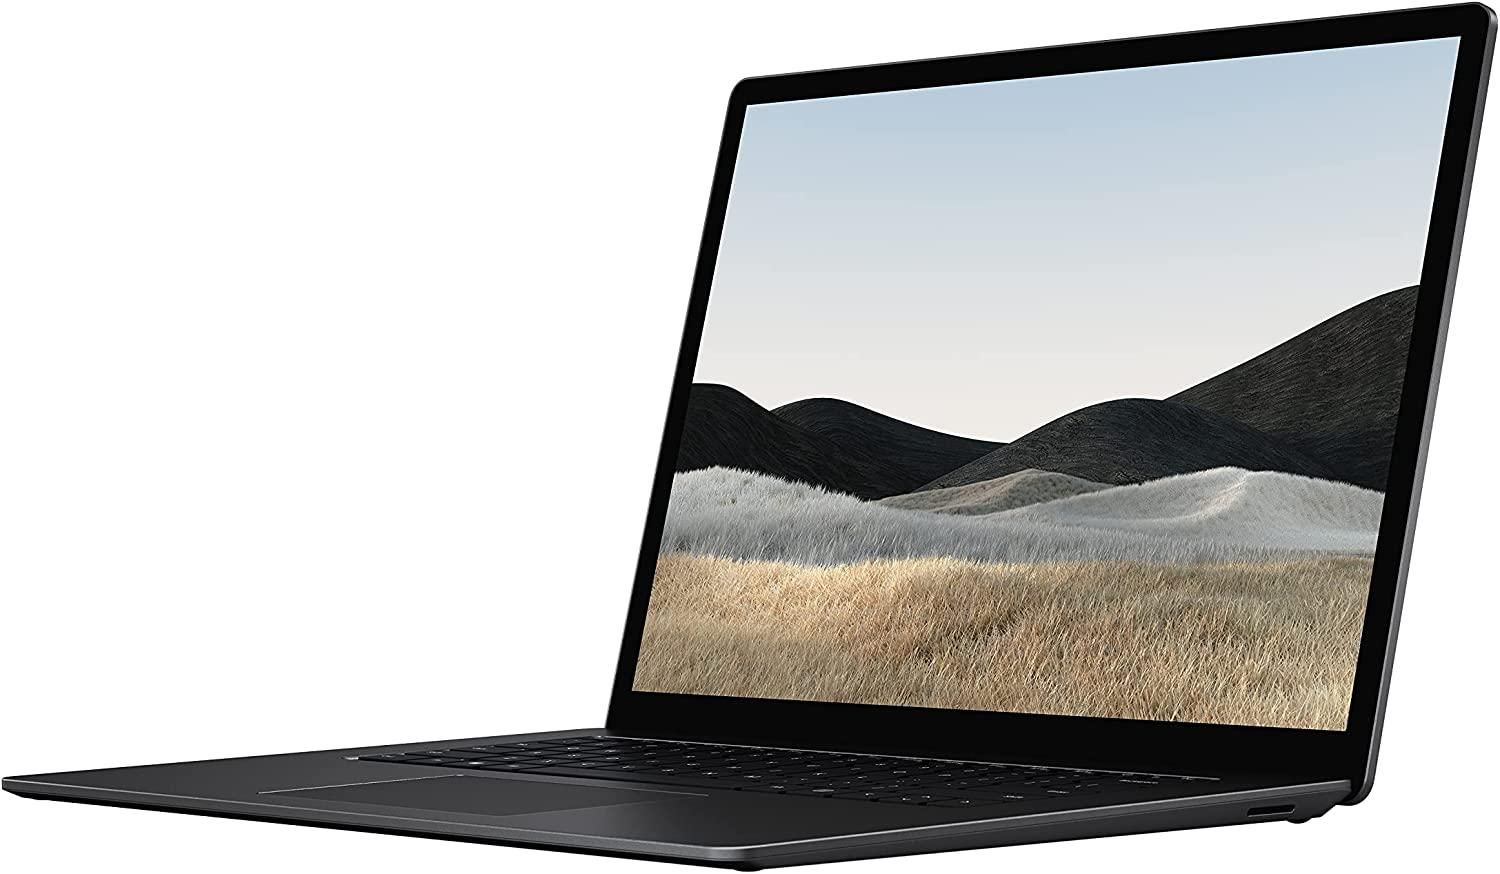 Microsoft Surface Laptop 4 product box image